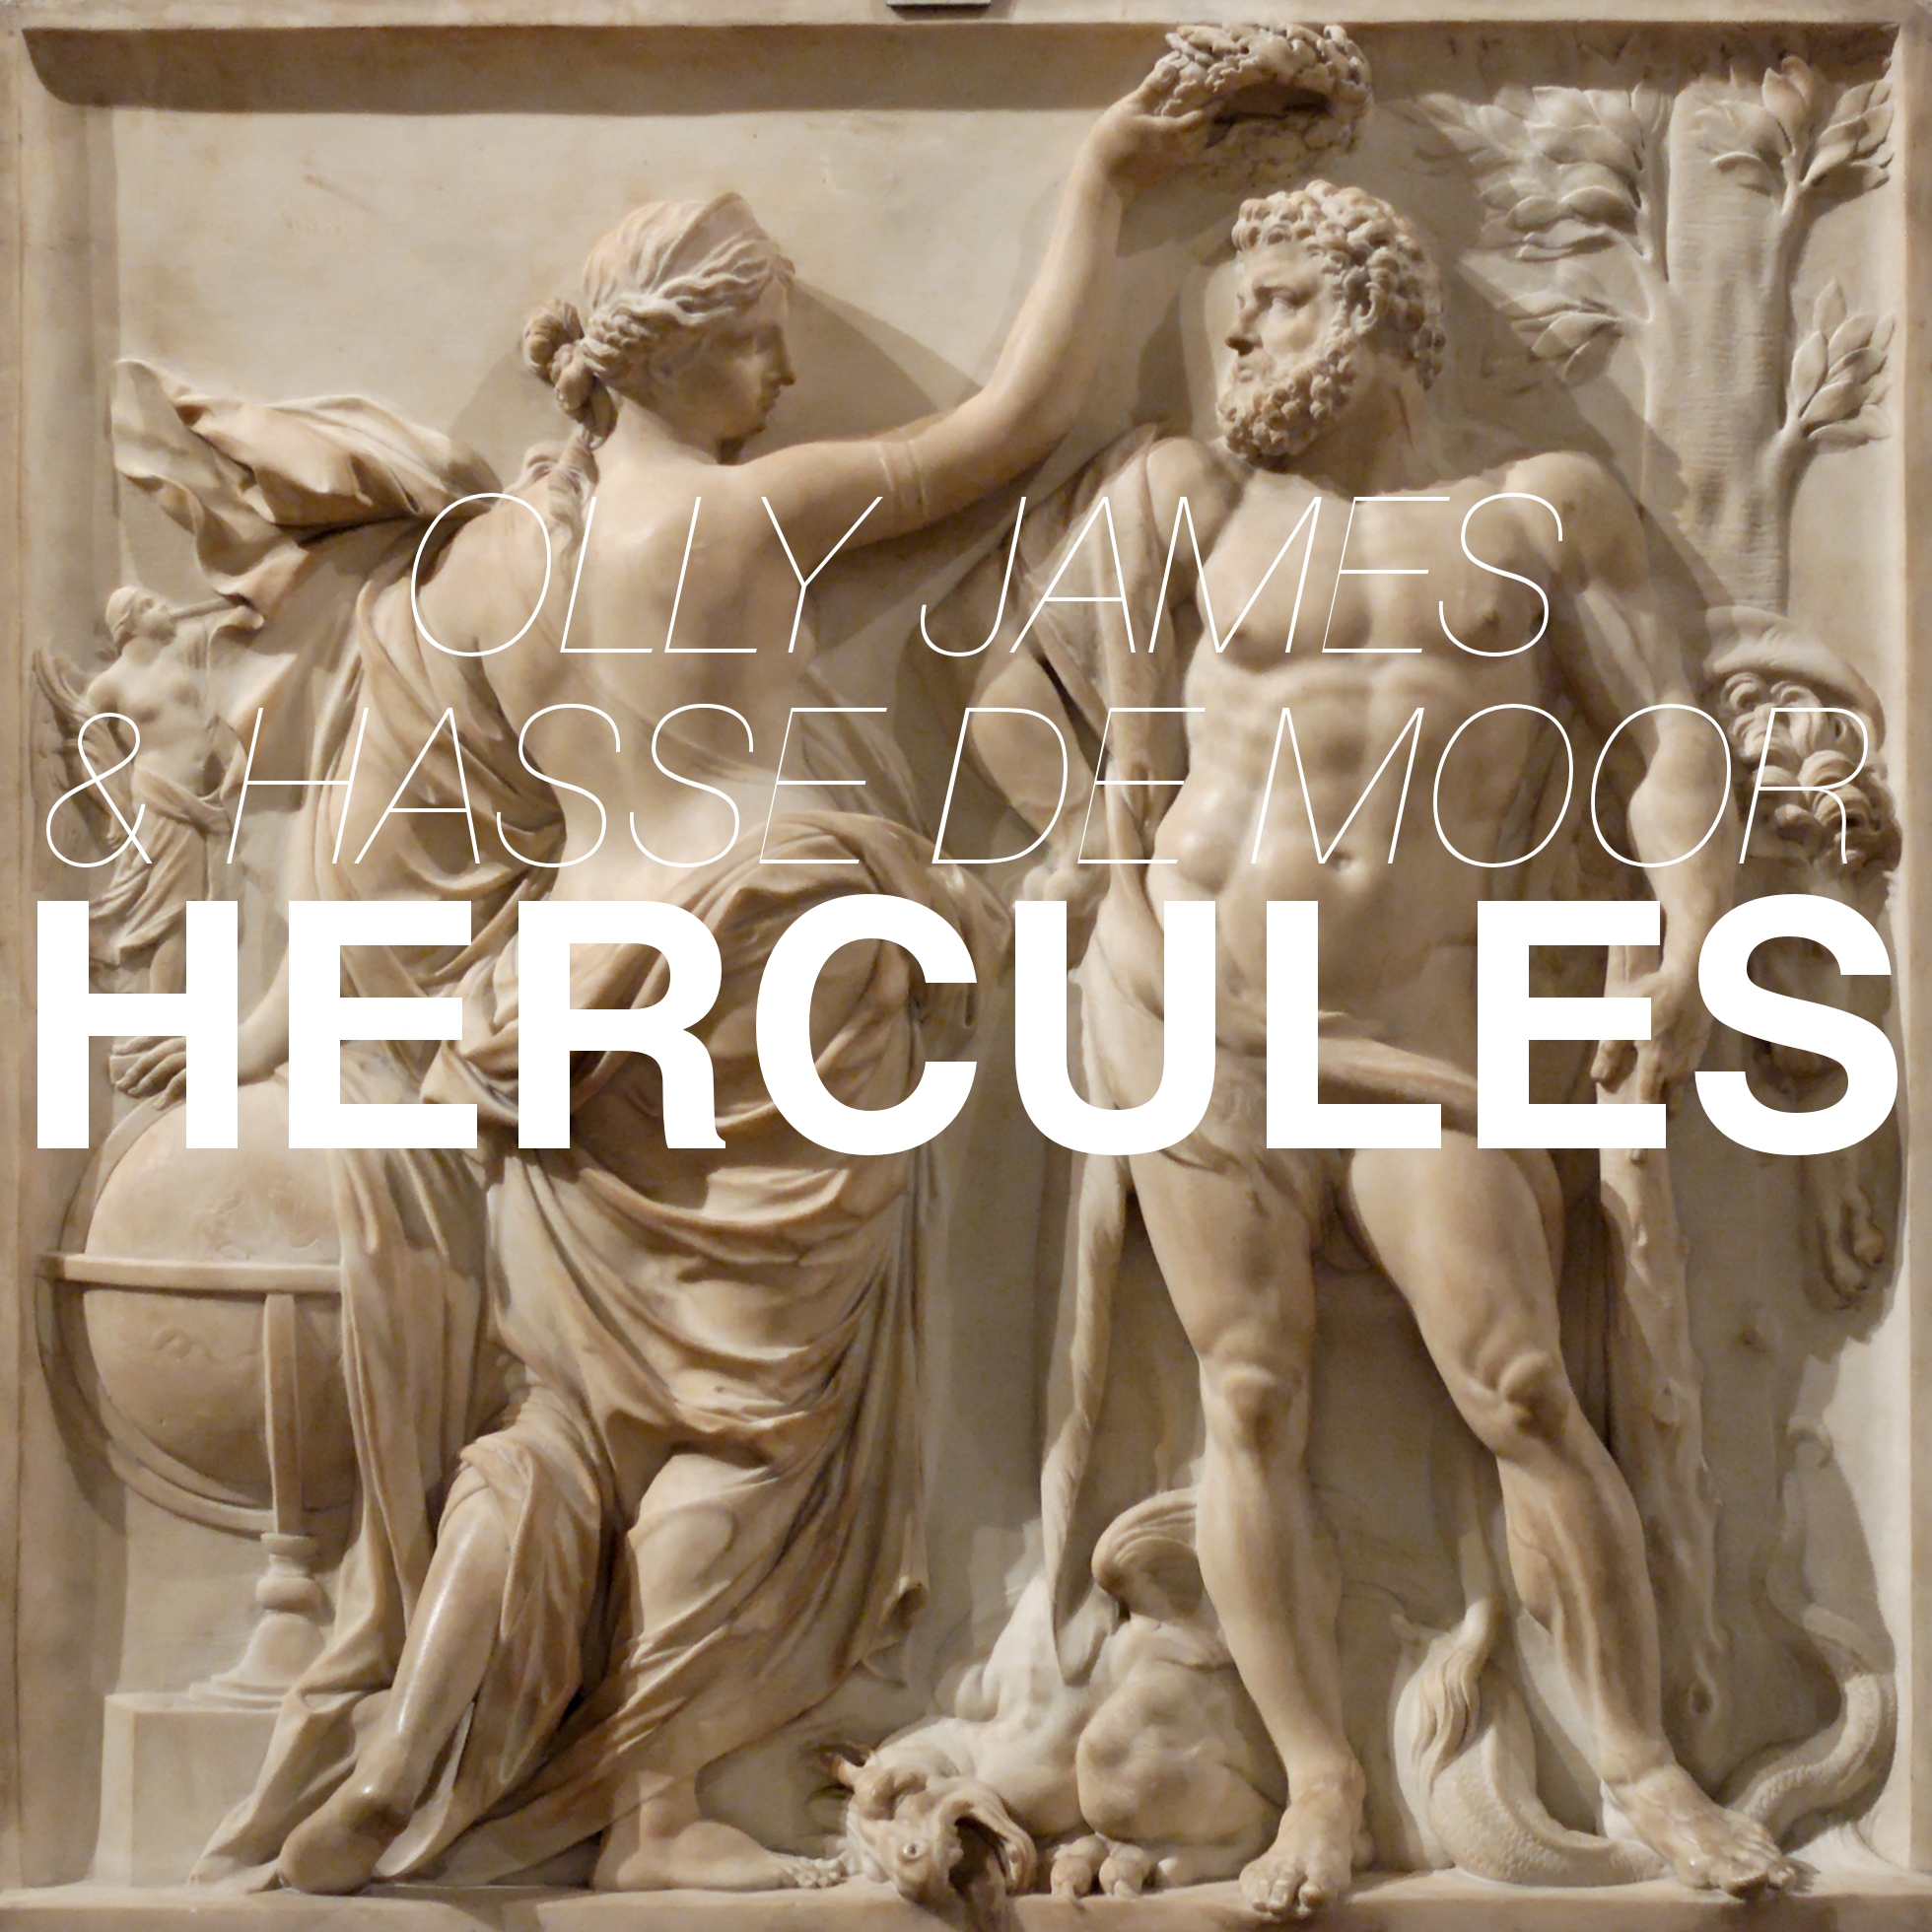 Olly James & Hasse De Moor - Hercules (Original Mix) Folder.jpg : 빅룸의 최고맛을 들려드리죠 ㅎ ★ Olly James & Hasse De Moor - Hercules (Original Mix) ★